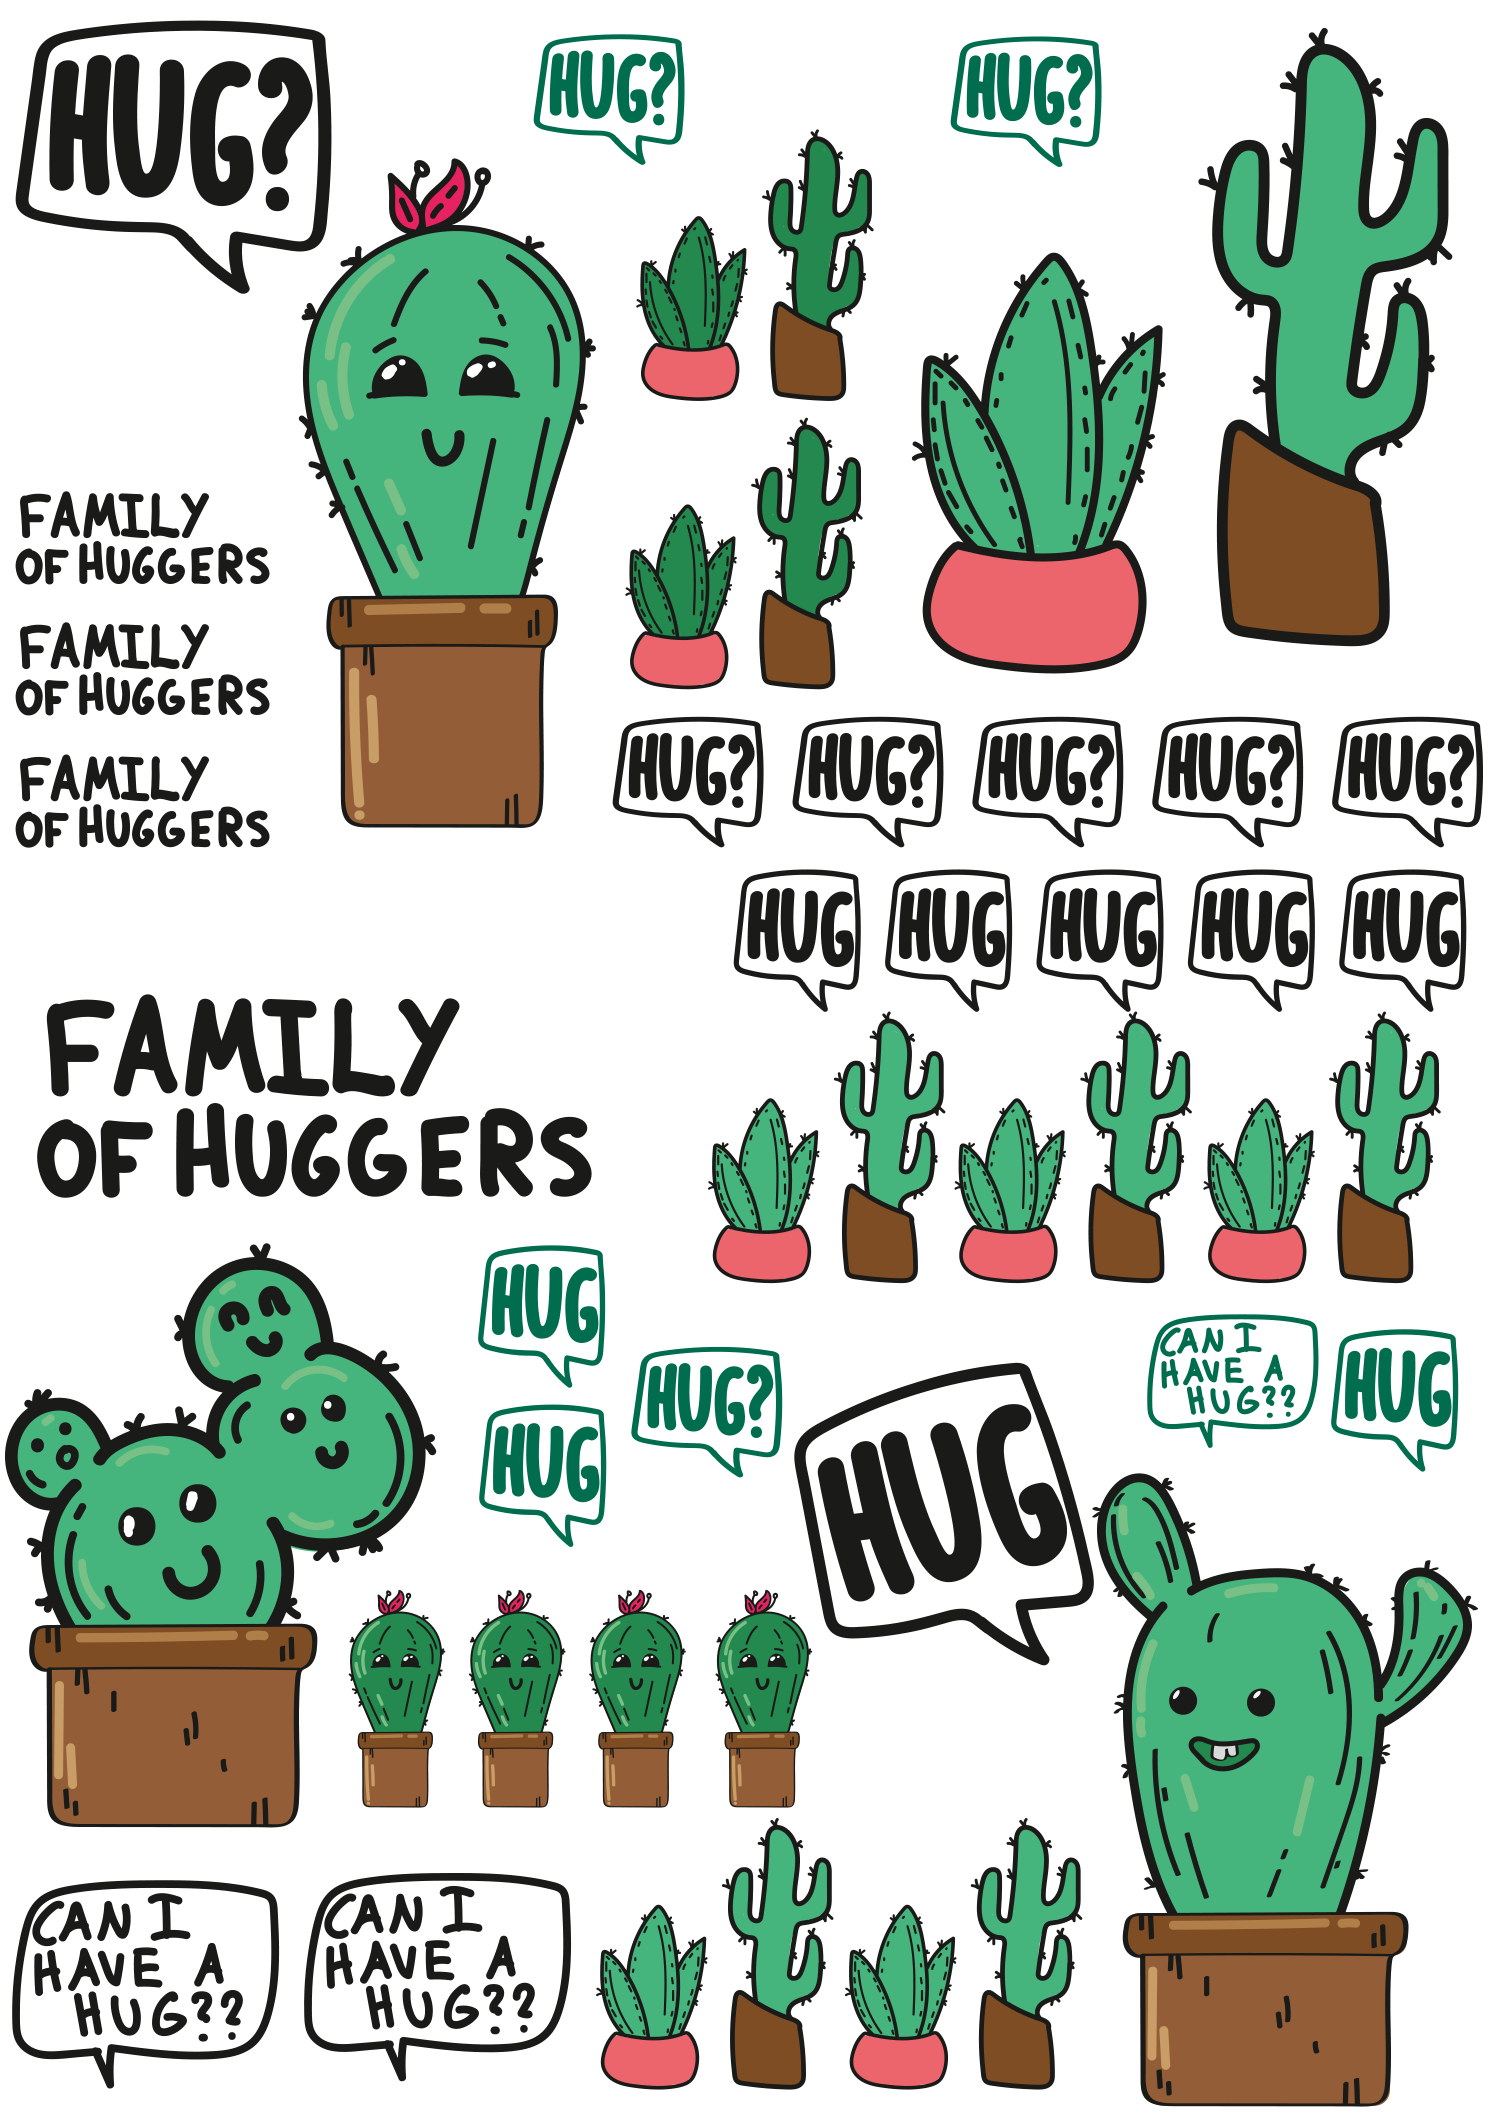 PRI00214 - Familie Rub-On Stickerbogen can i have a hug Kaktus